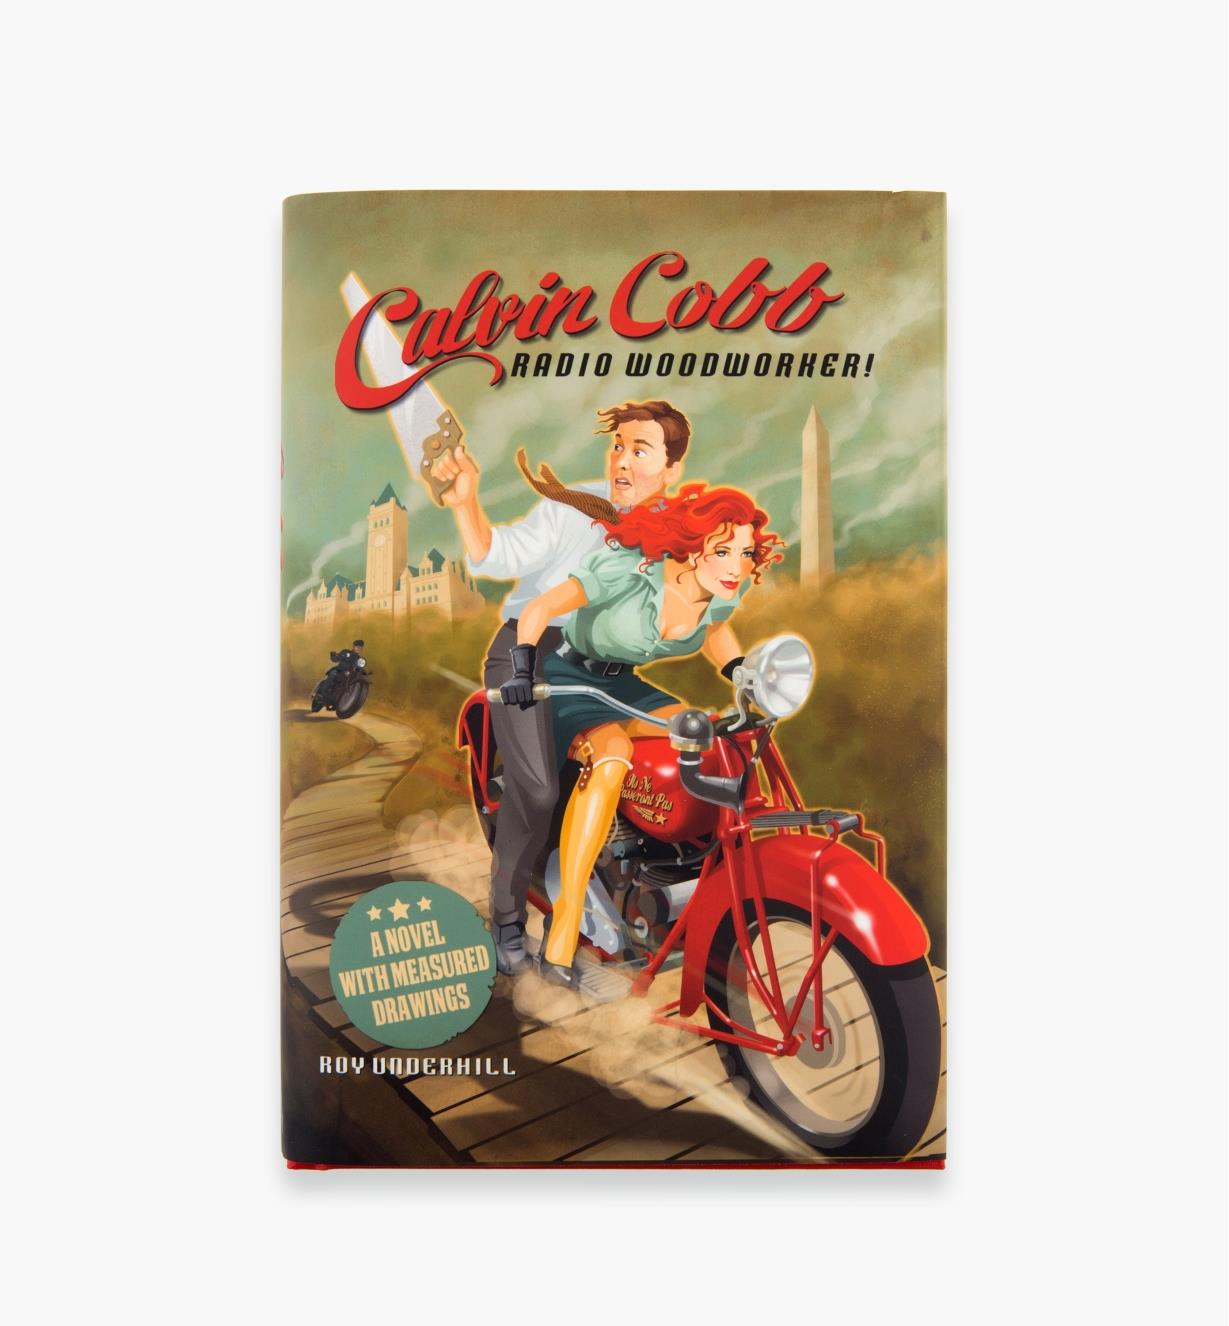 20L0329 - Calvin Cobb: Radio Woodworker!